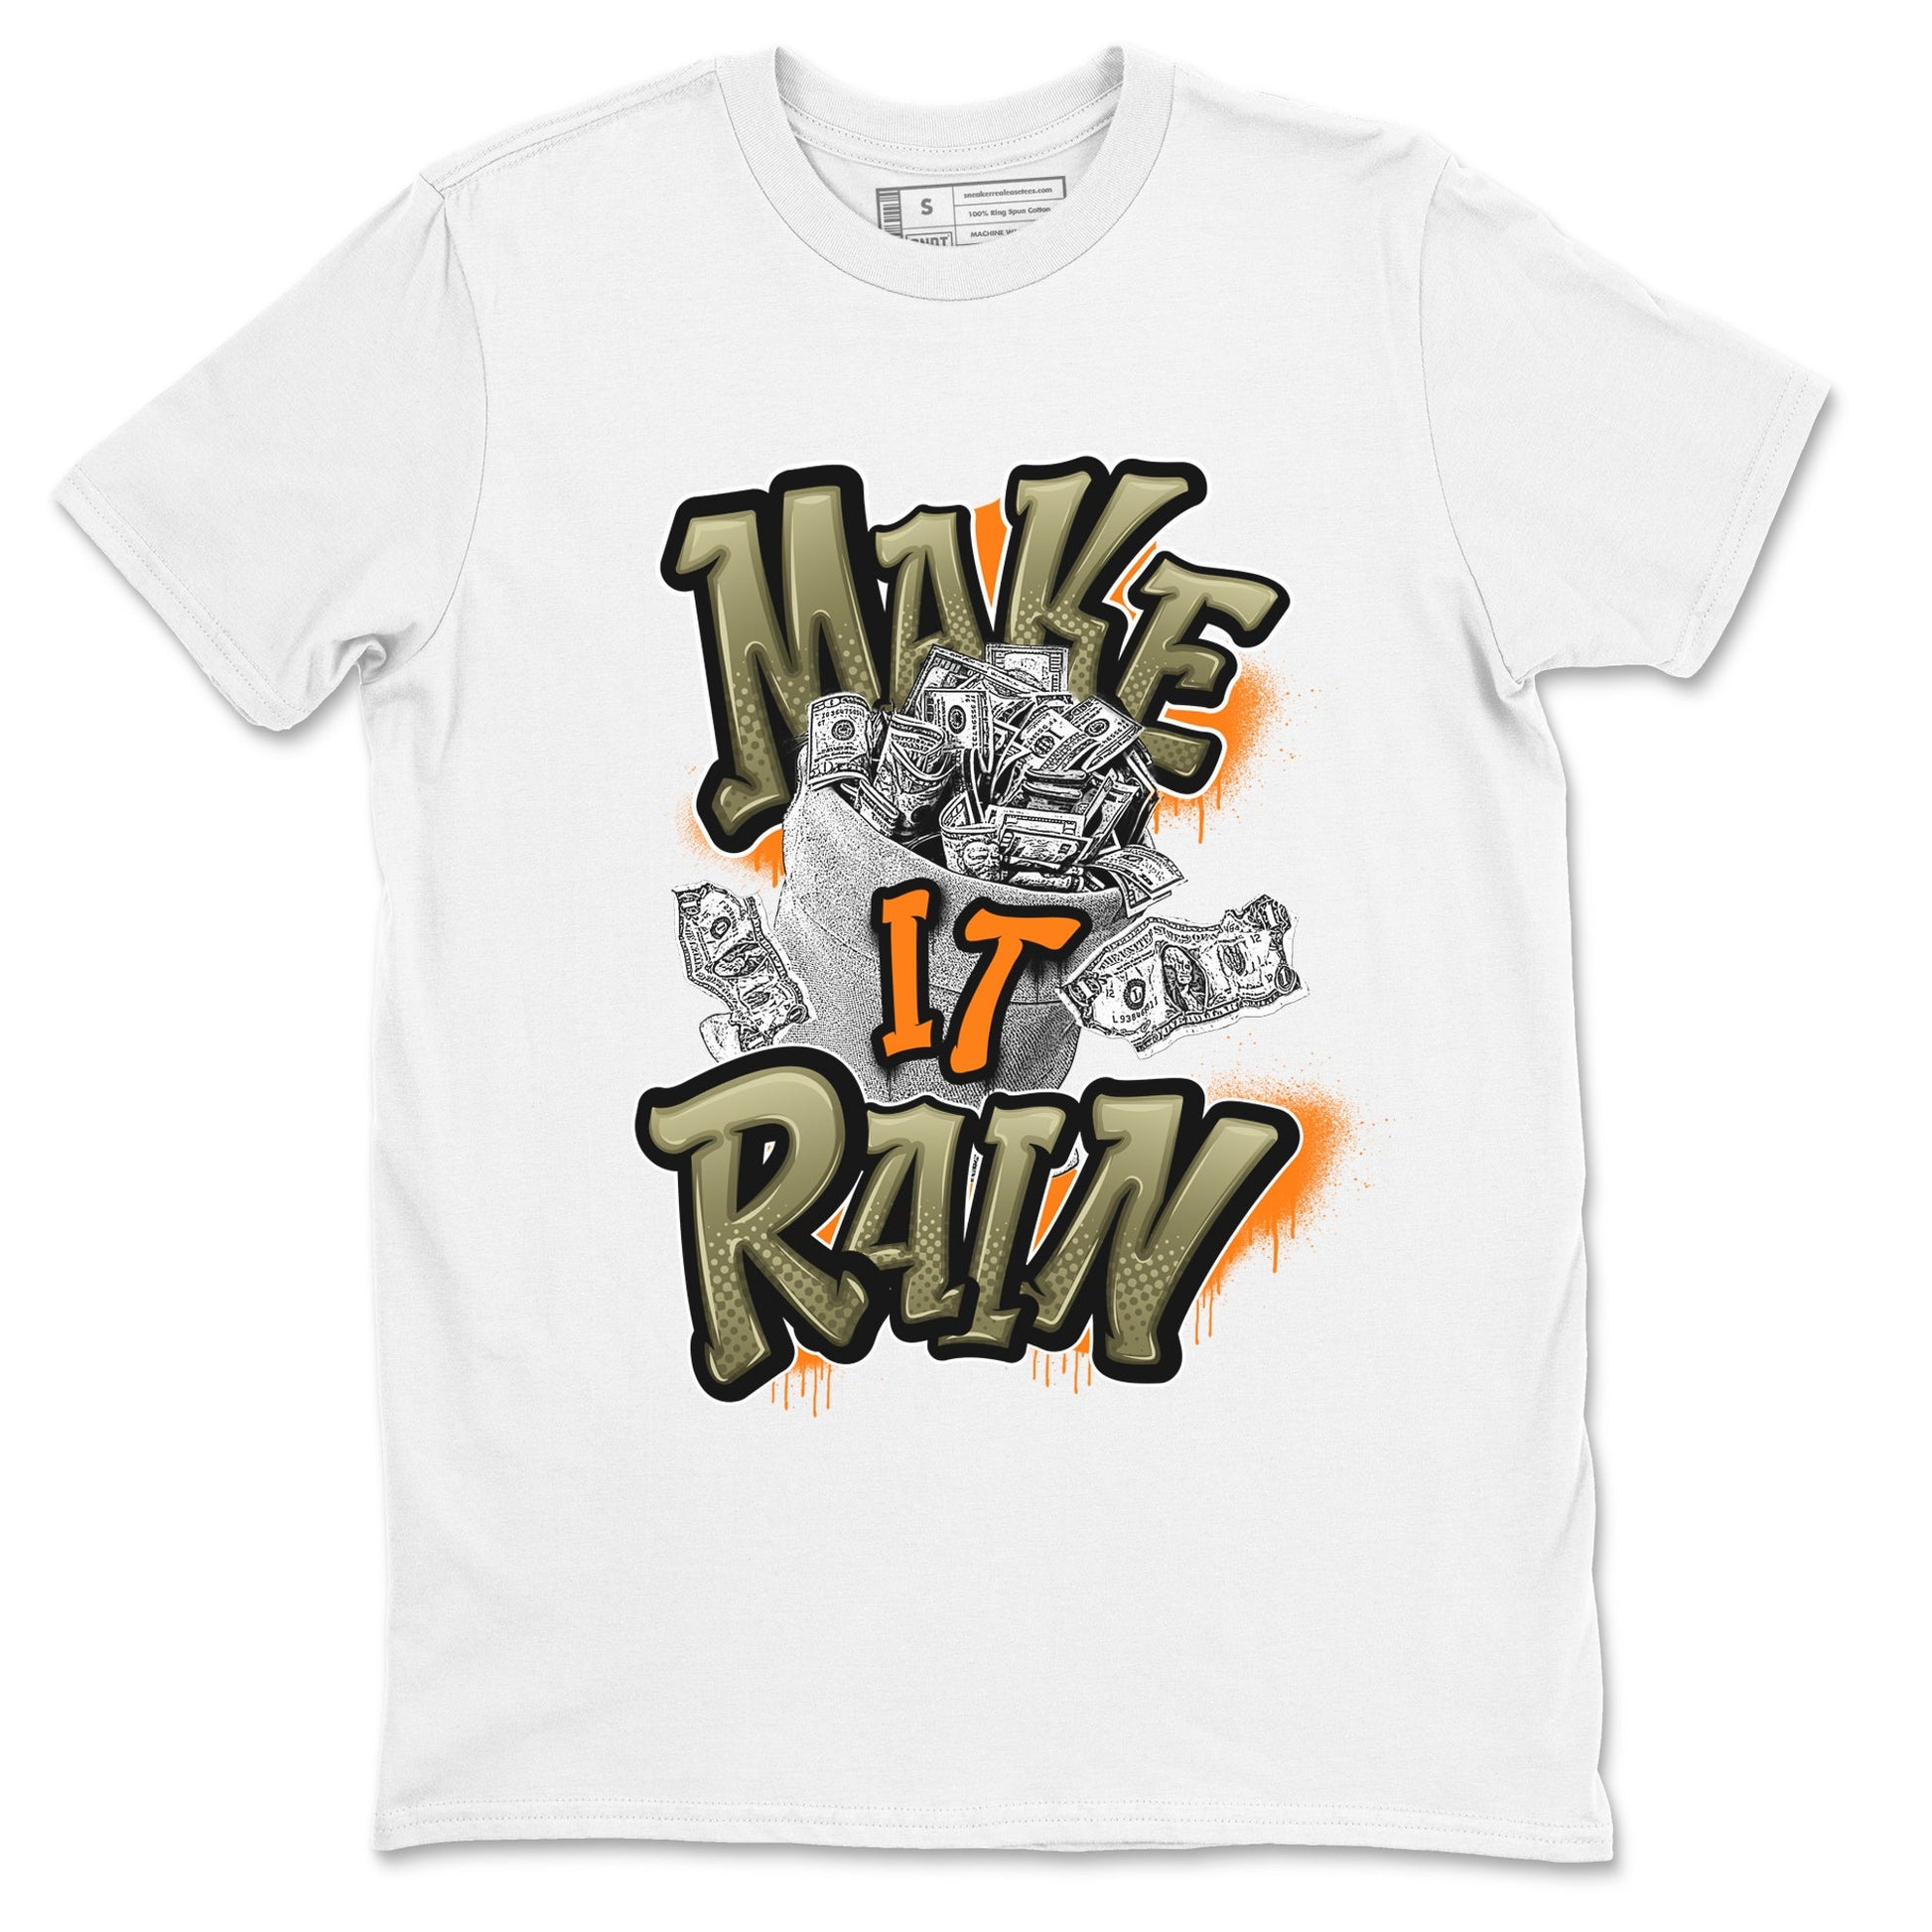 5s Olive shirt to match jordans Make It Rain sneaker tees Air Jordan 5 Olive SNRT Sneaker Release Tees unisex cotton White 2 crew neck shirt